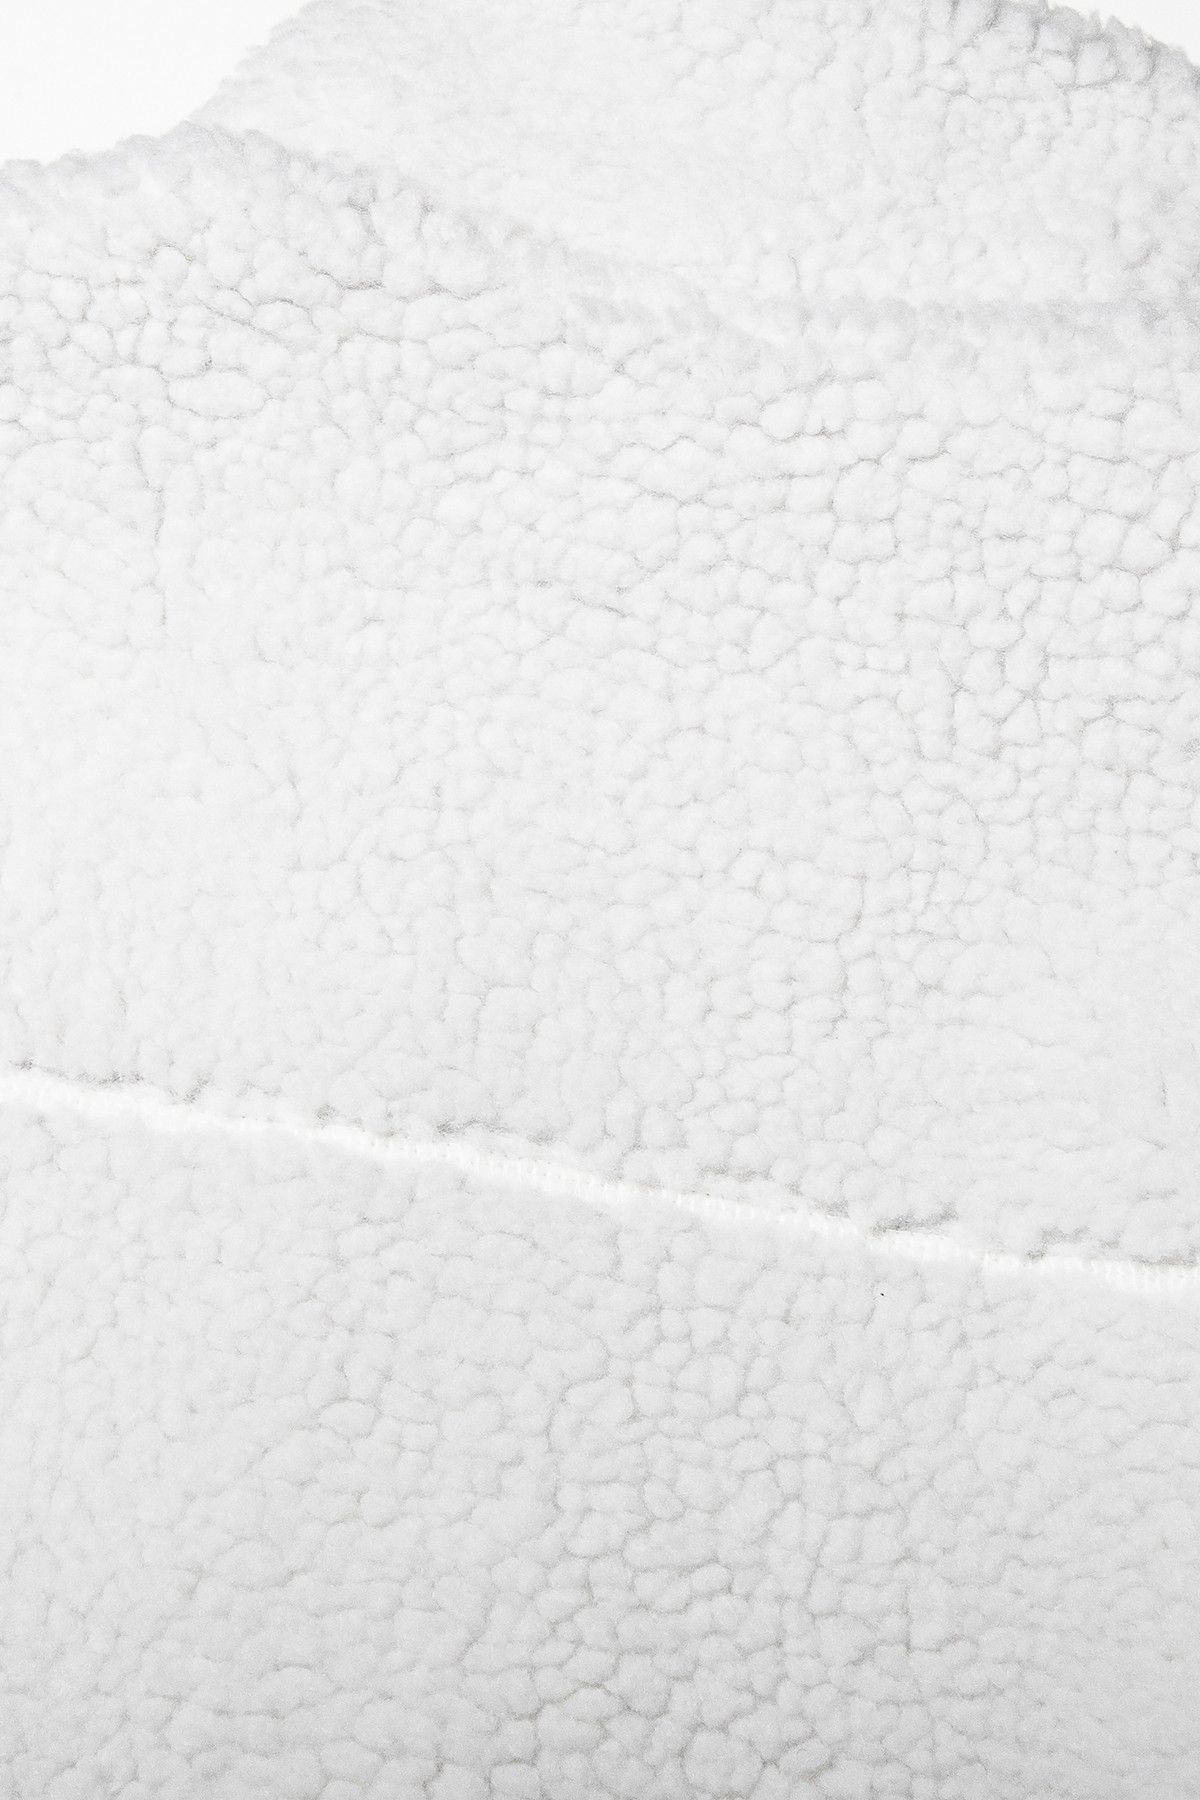 Hype - Nodot: Bebber Fleece NOD Embroidery White Coat Large - 5